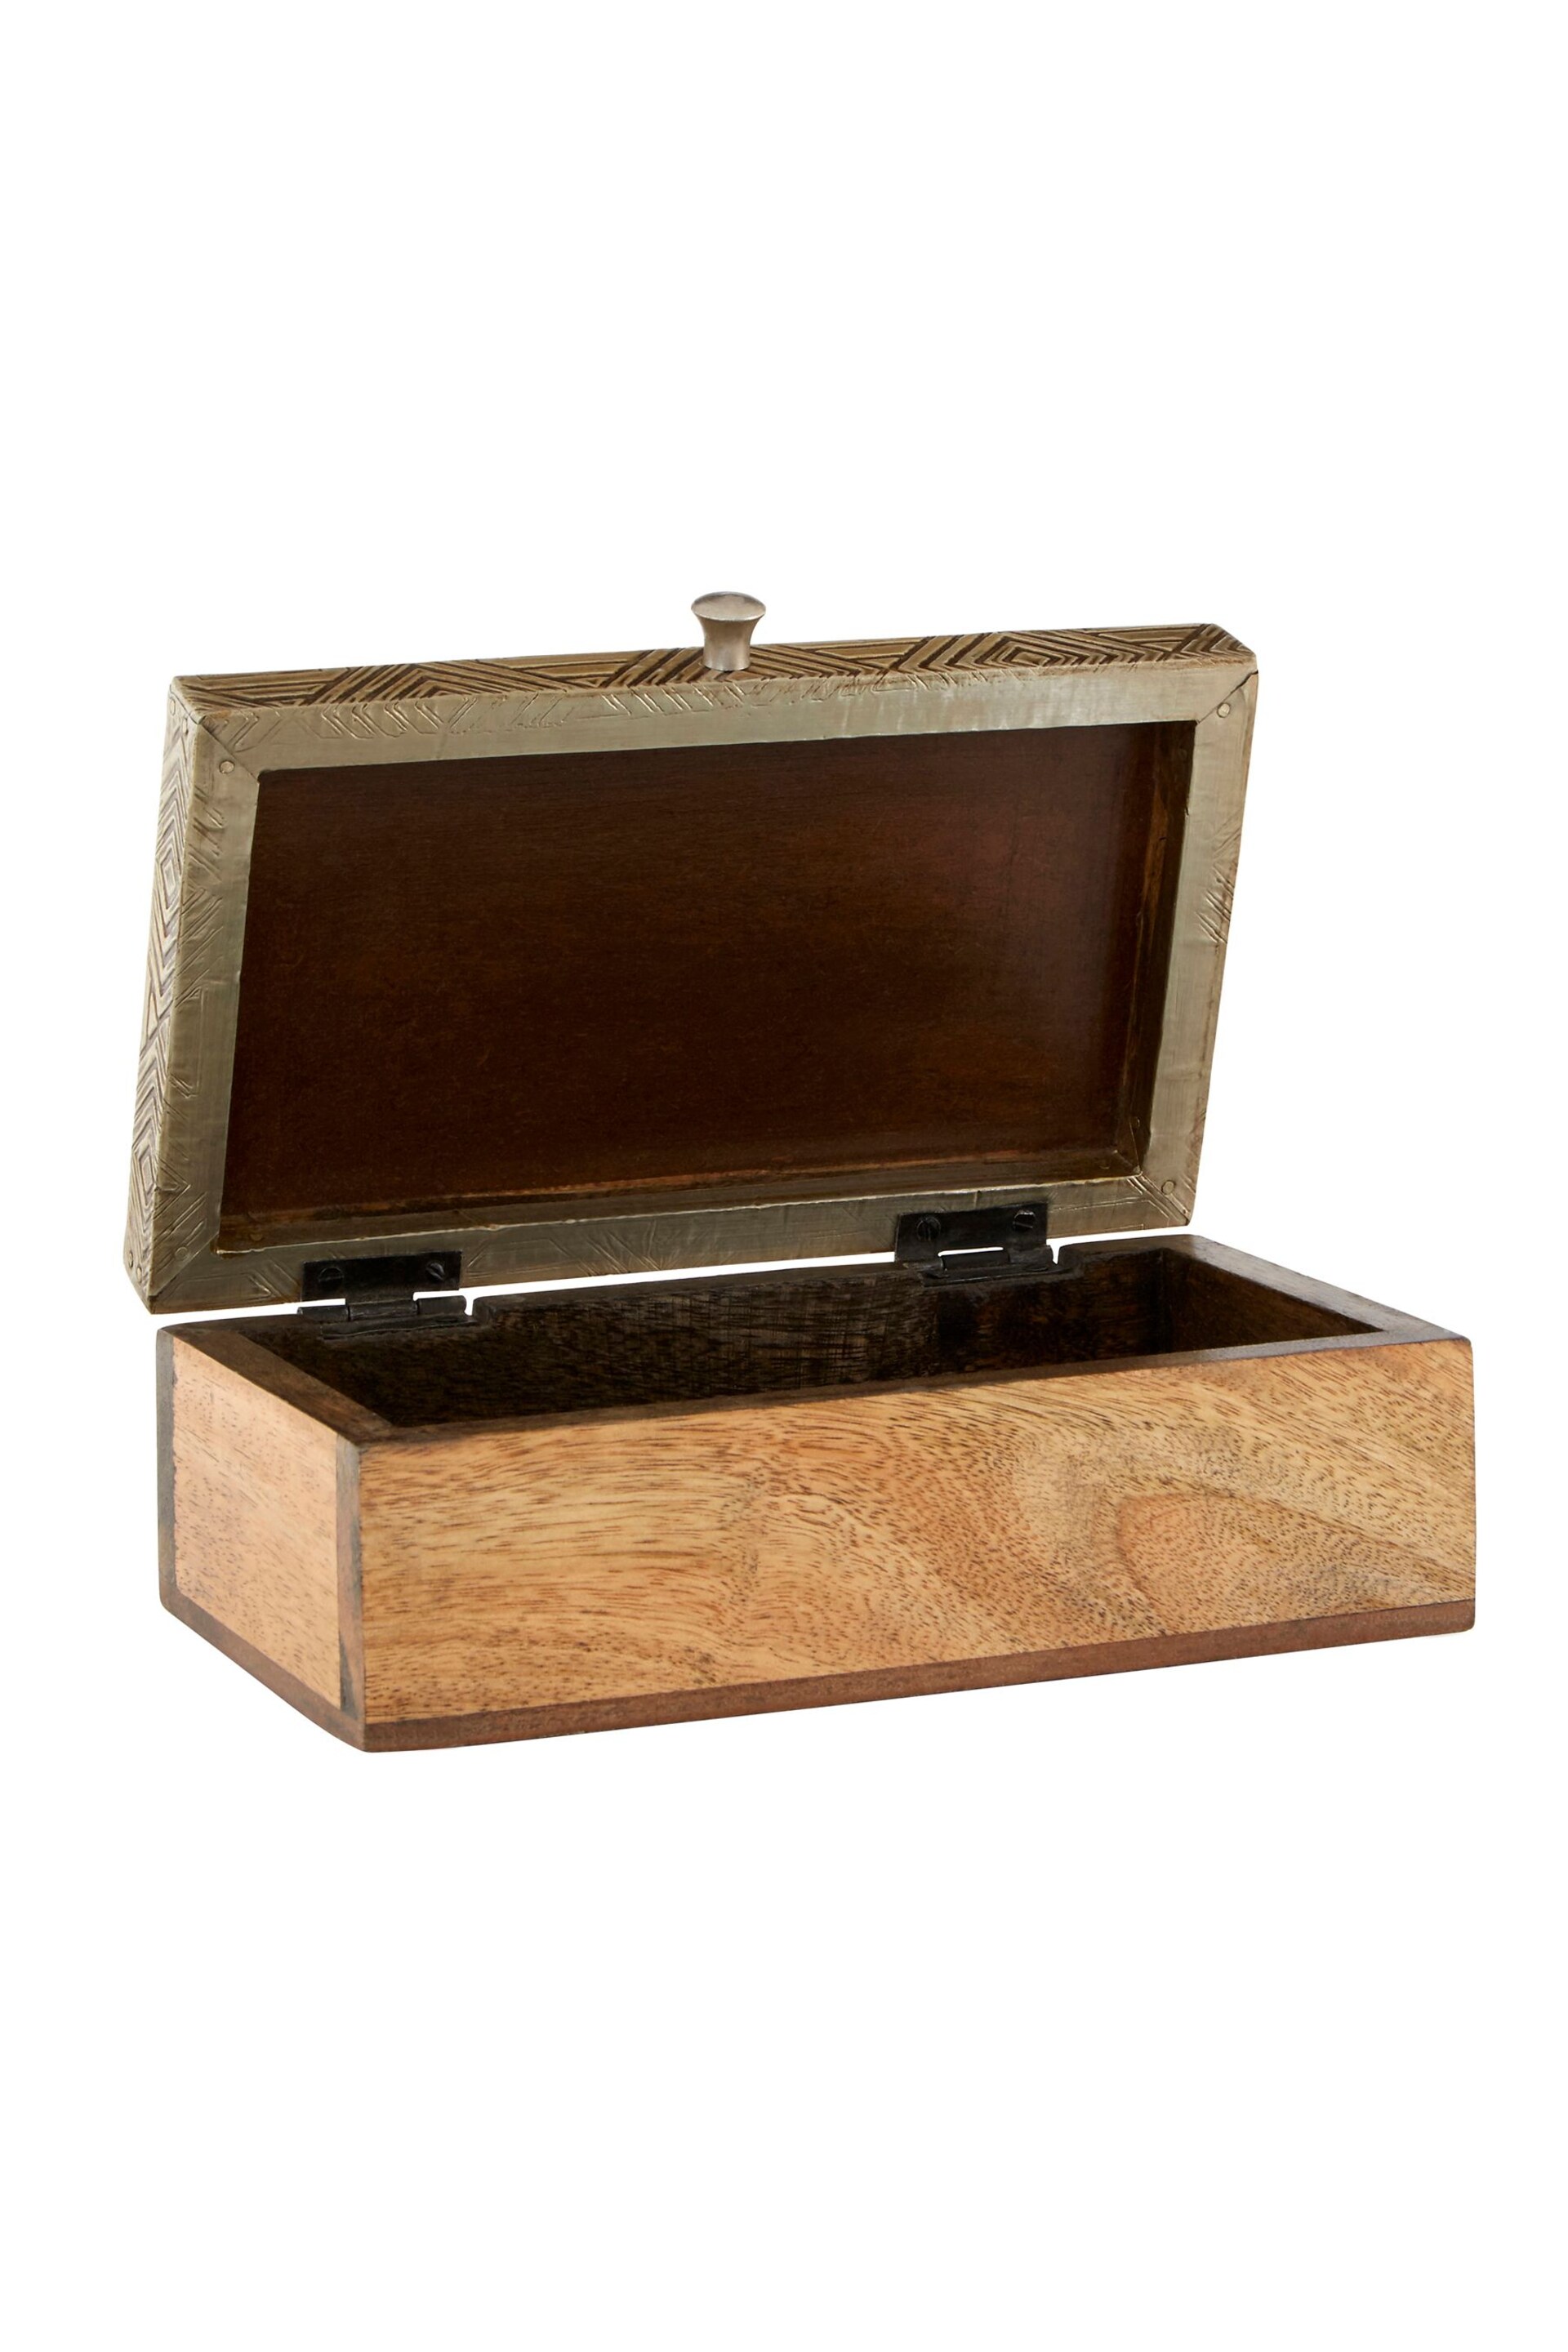 Fifty Five South Black Bowerbird Metallic Tribal Design Small Trinket Box - Image 4 of 4